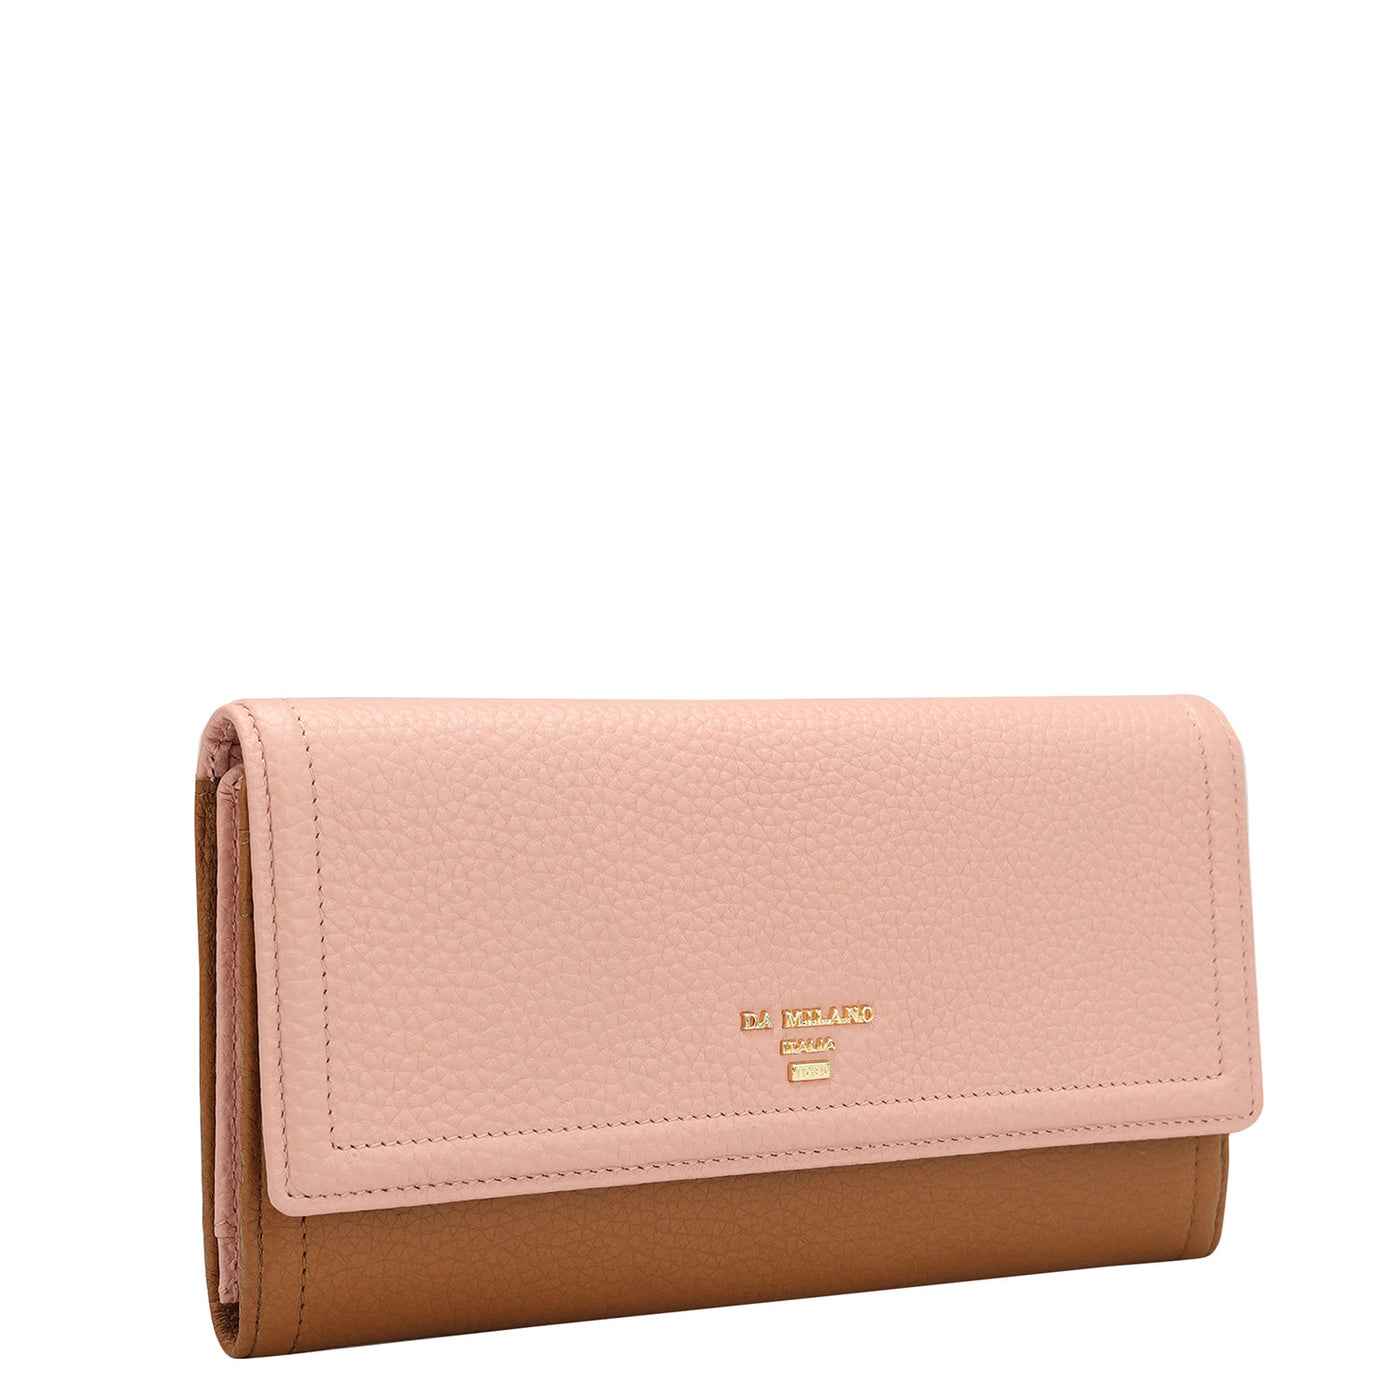 Wax Leather Ladies Wallet - Baby Pink & Tan